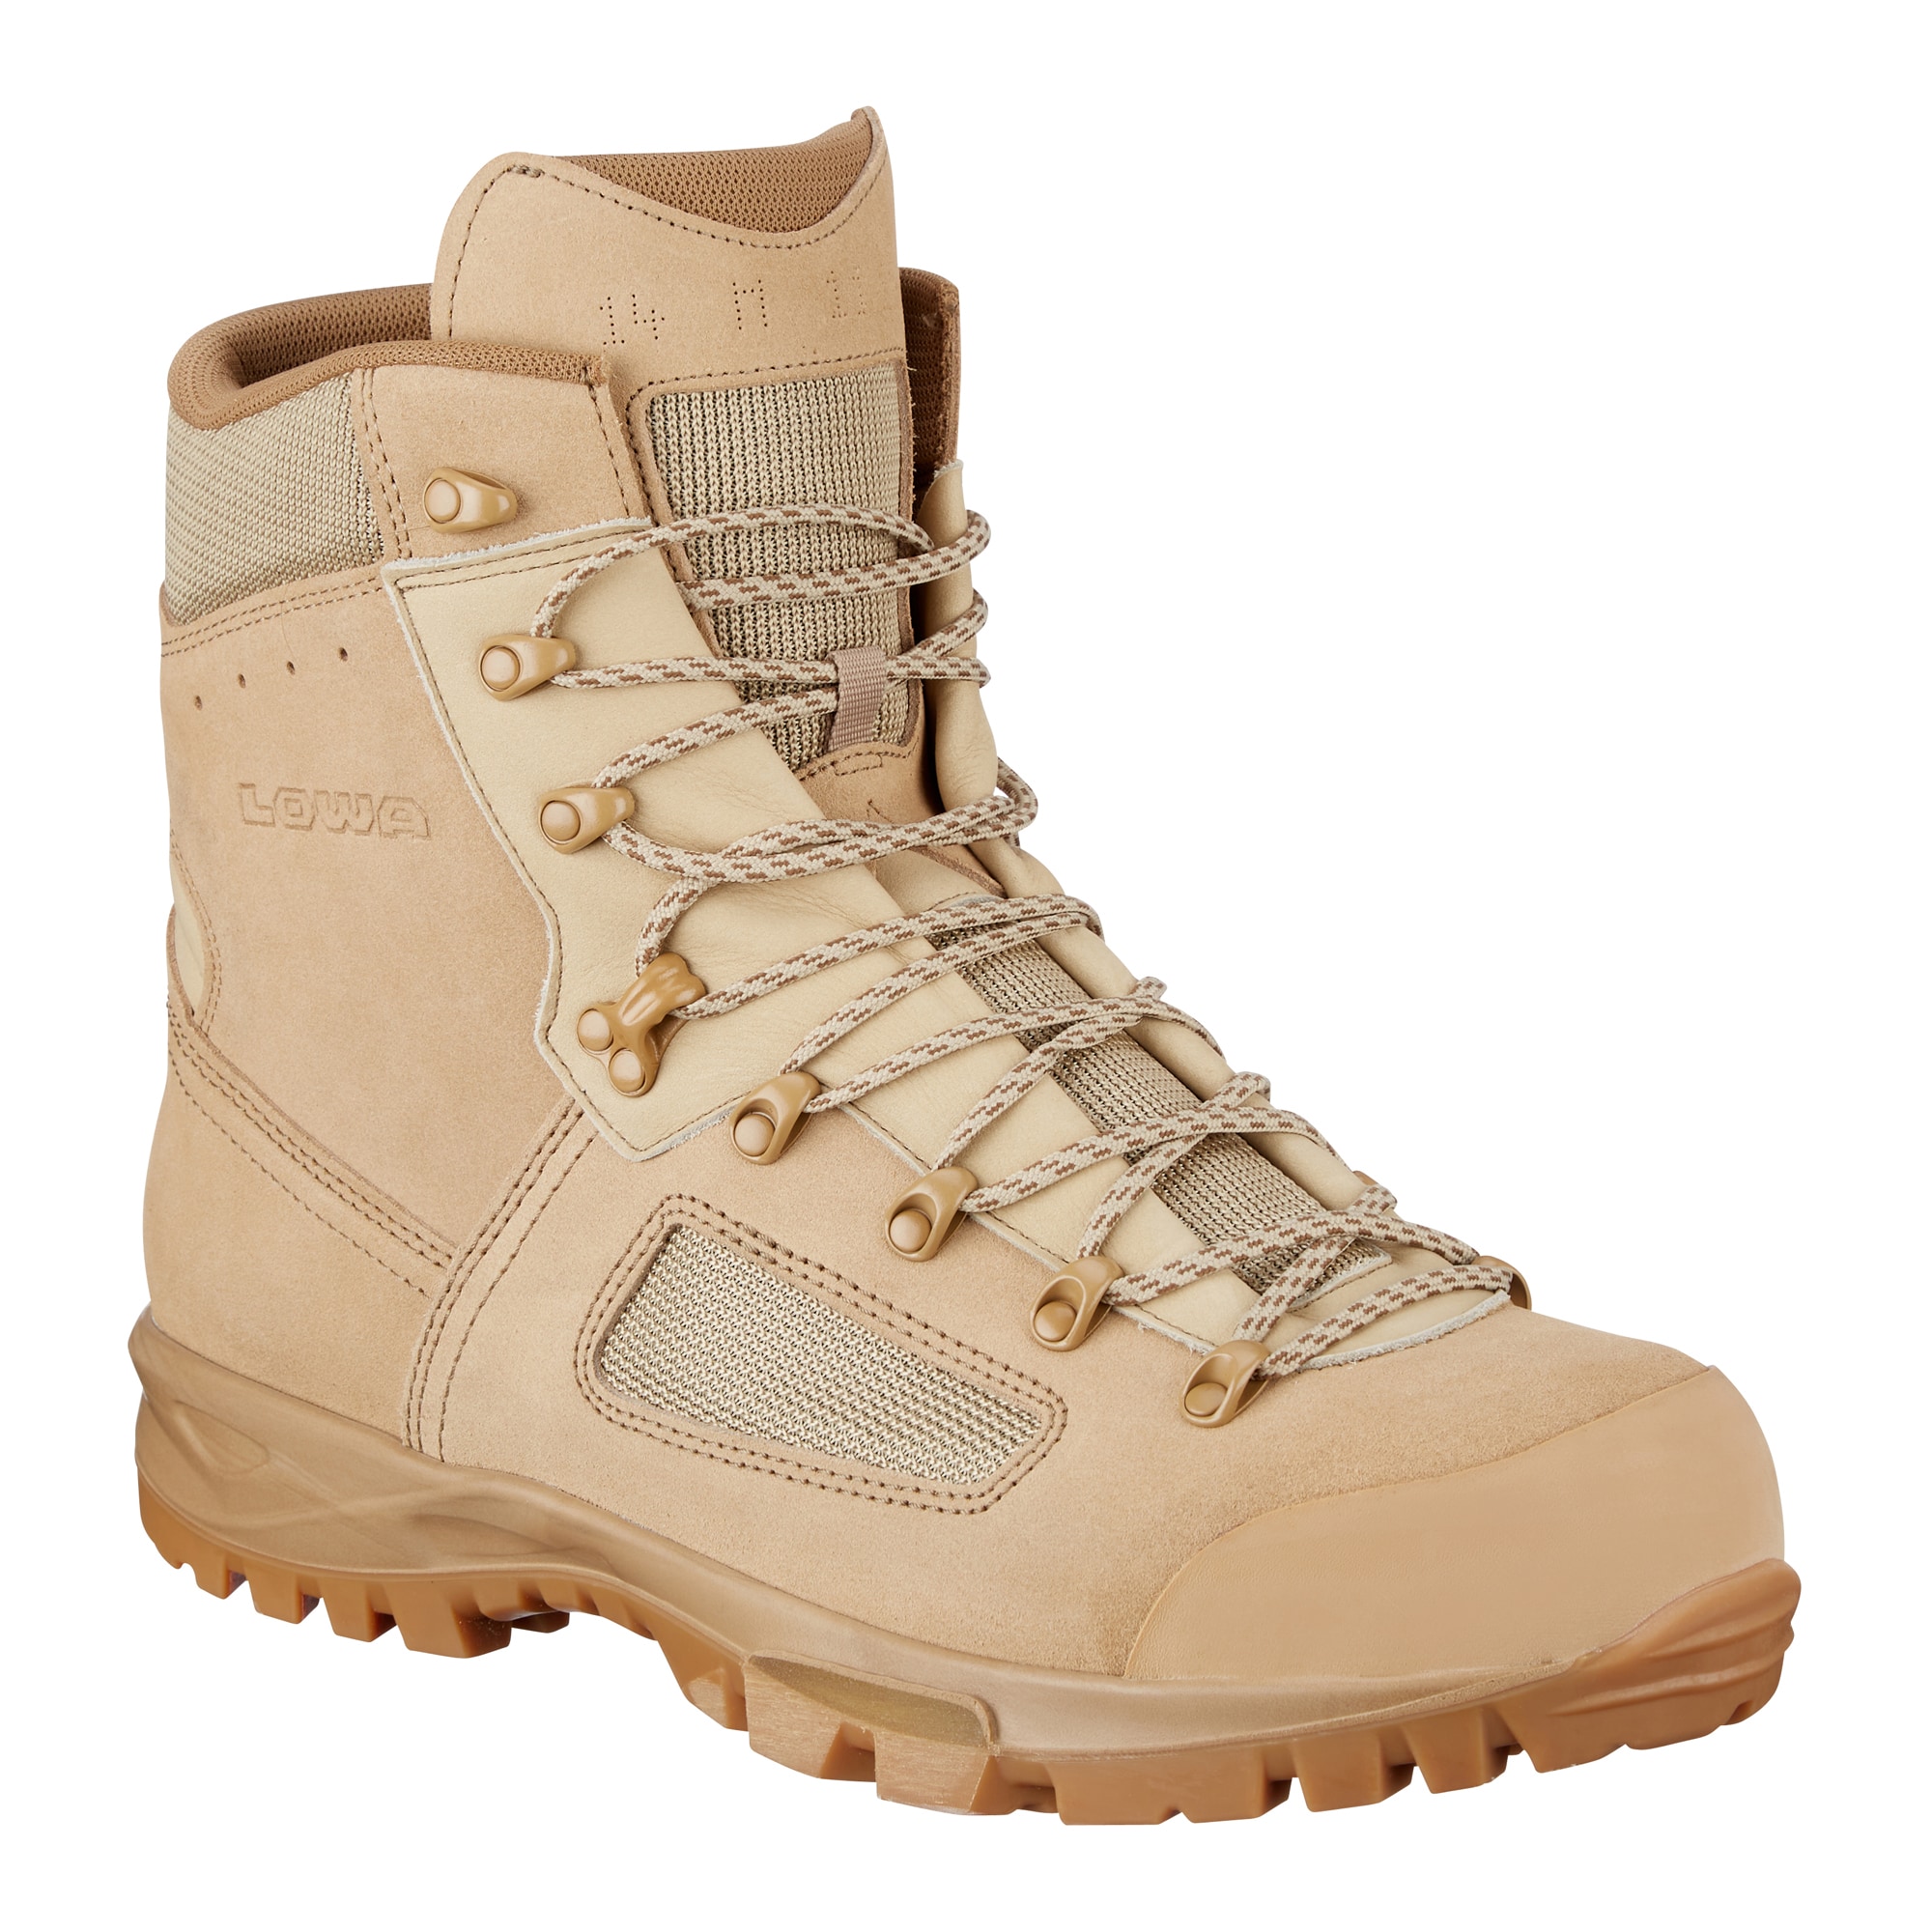 Purchase the Lowa Boots Elite Desert Extra khaki by ASMC